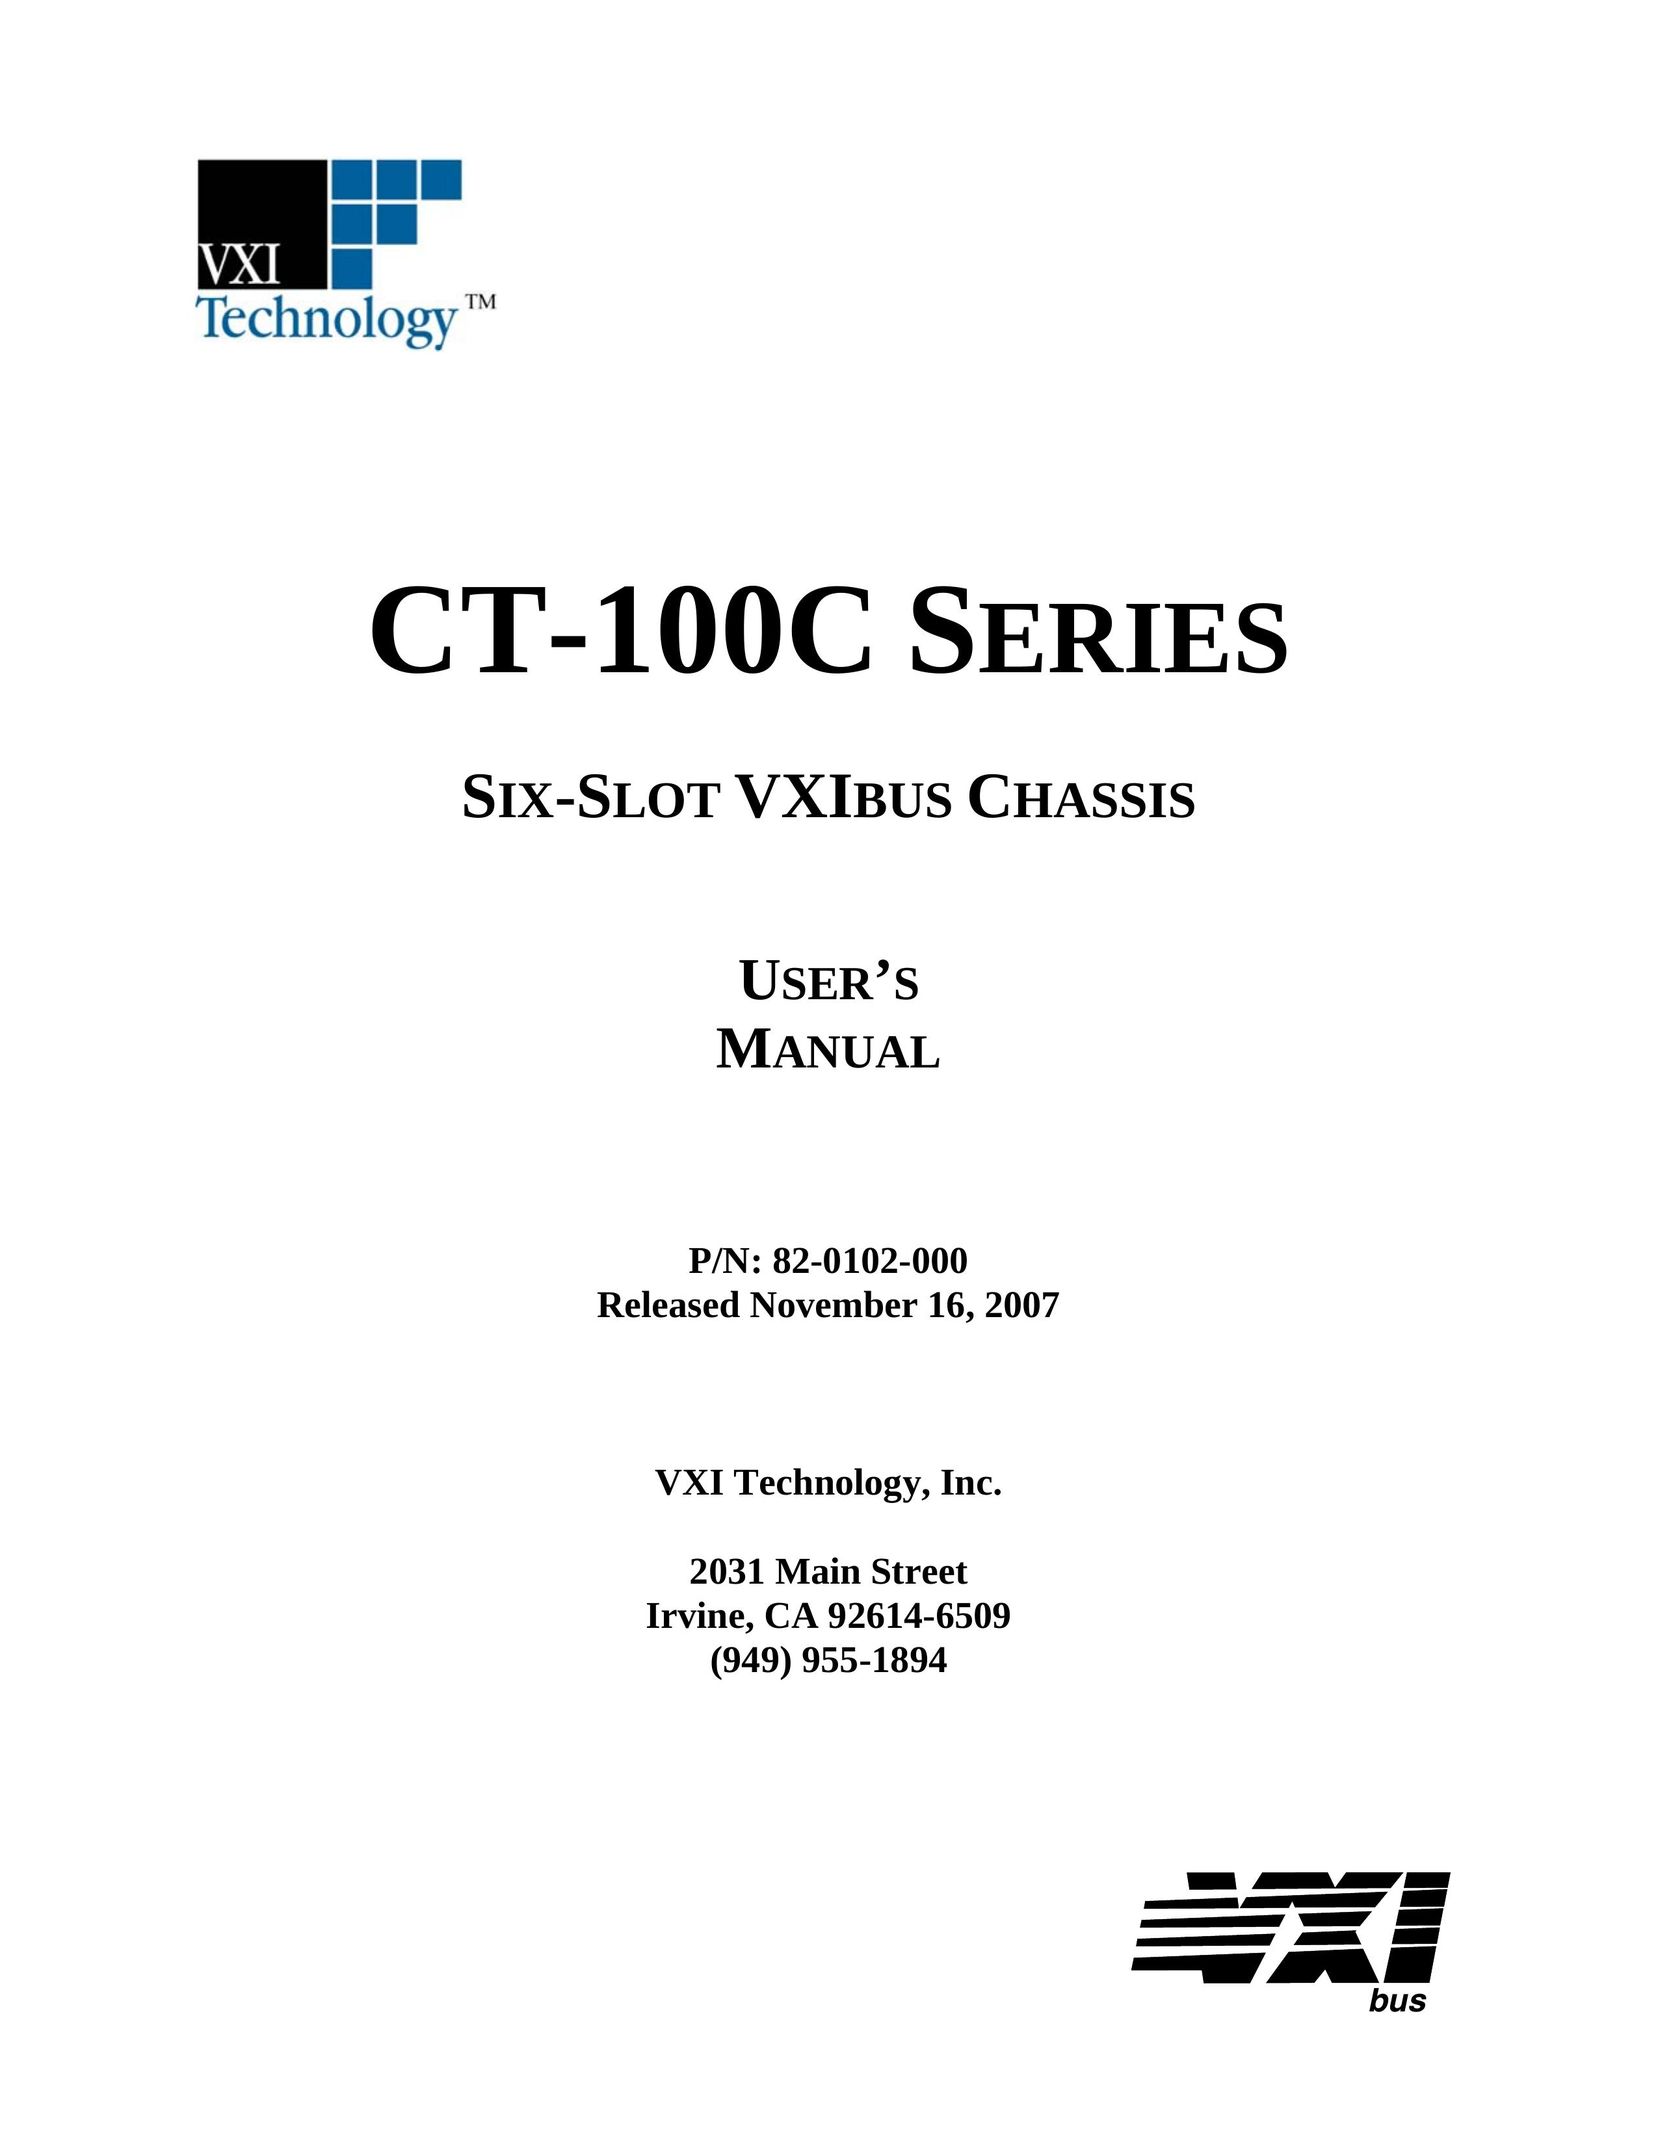 VXI CT-100C Series Six-Slot VXIBus Chassis Network Hardware User Manual